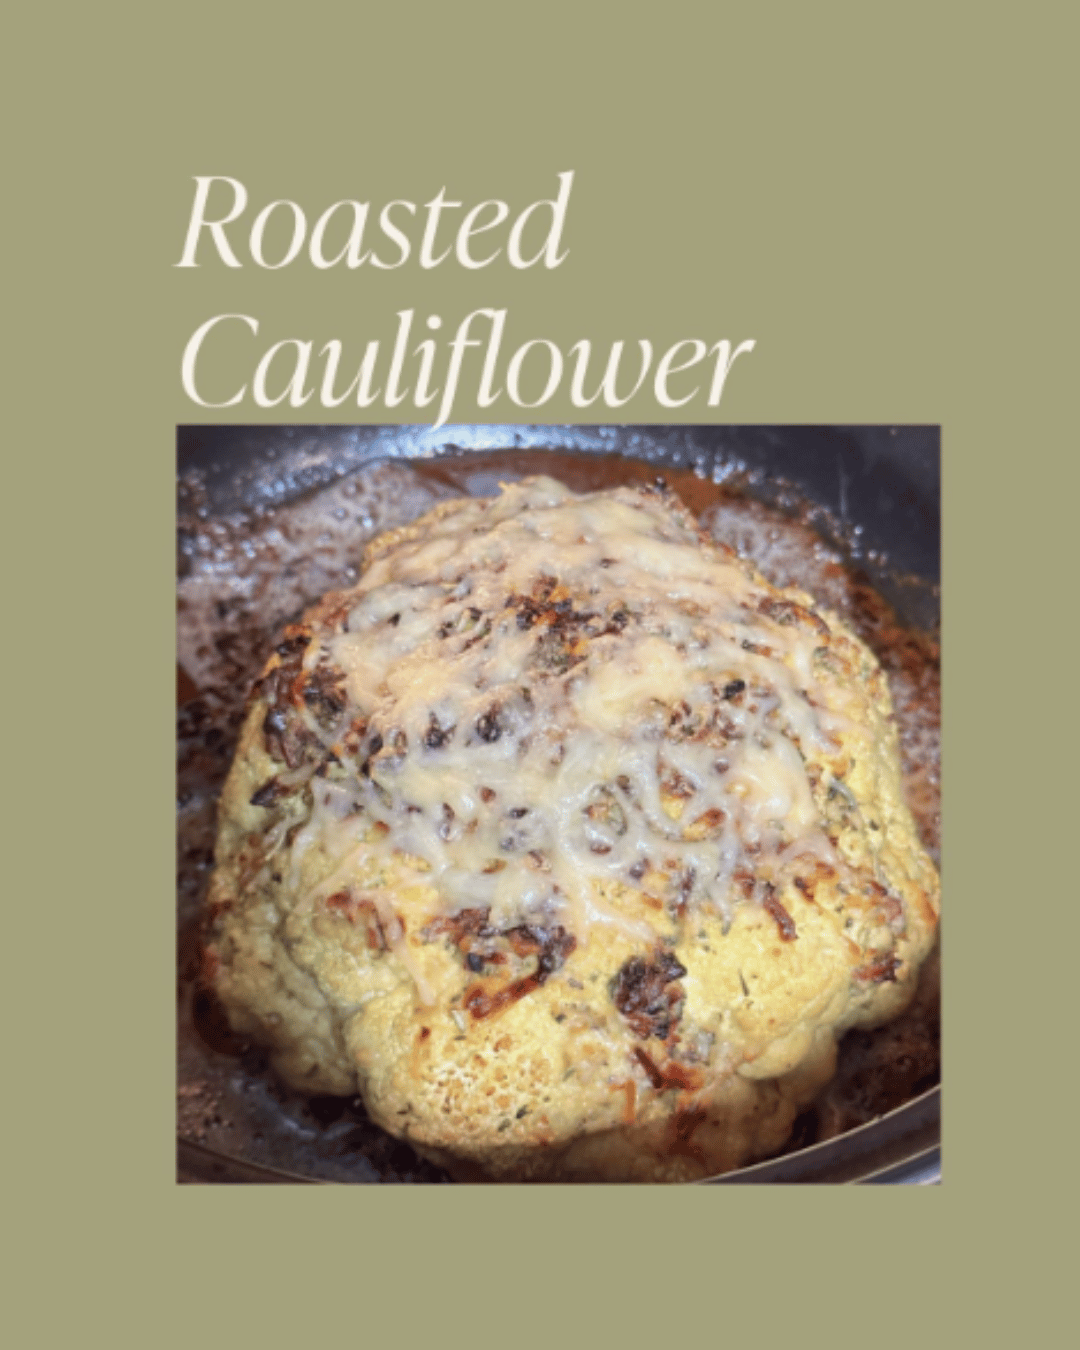 air fryer cauliflower roasted cauliflower recipes